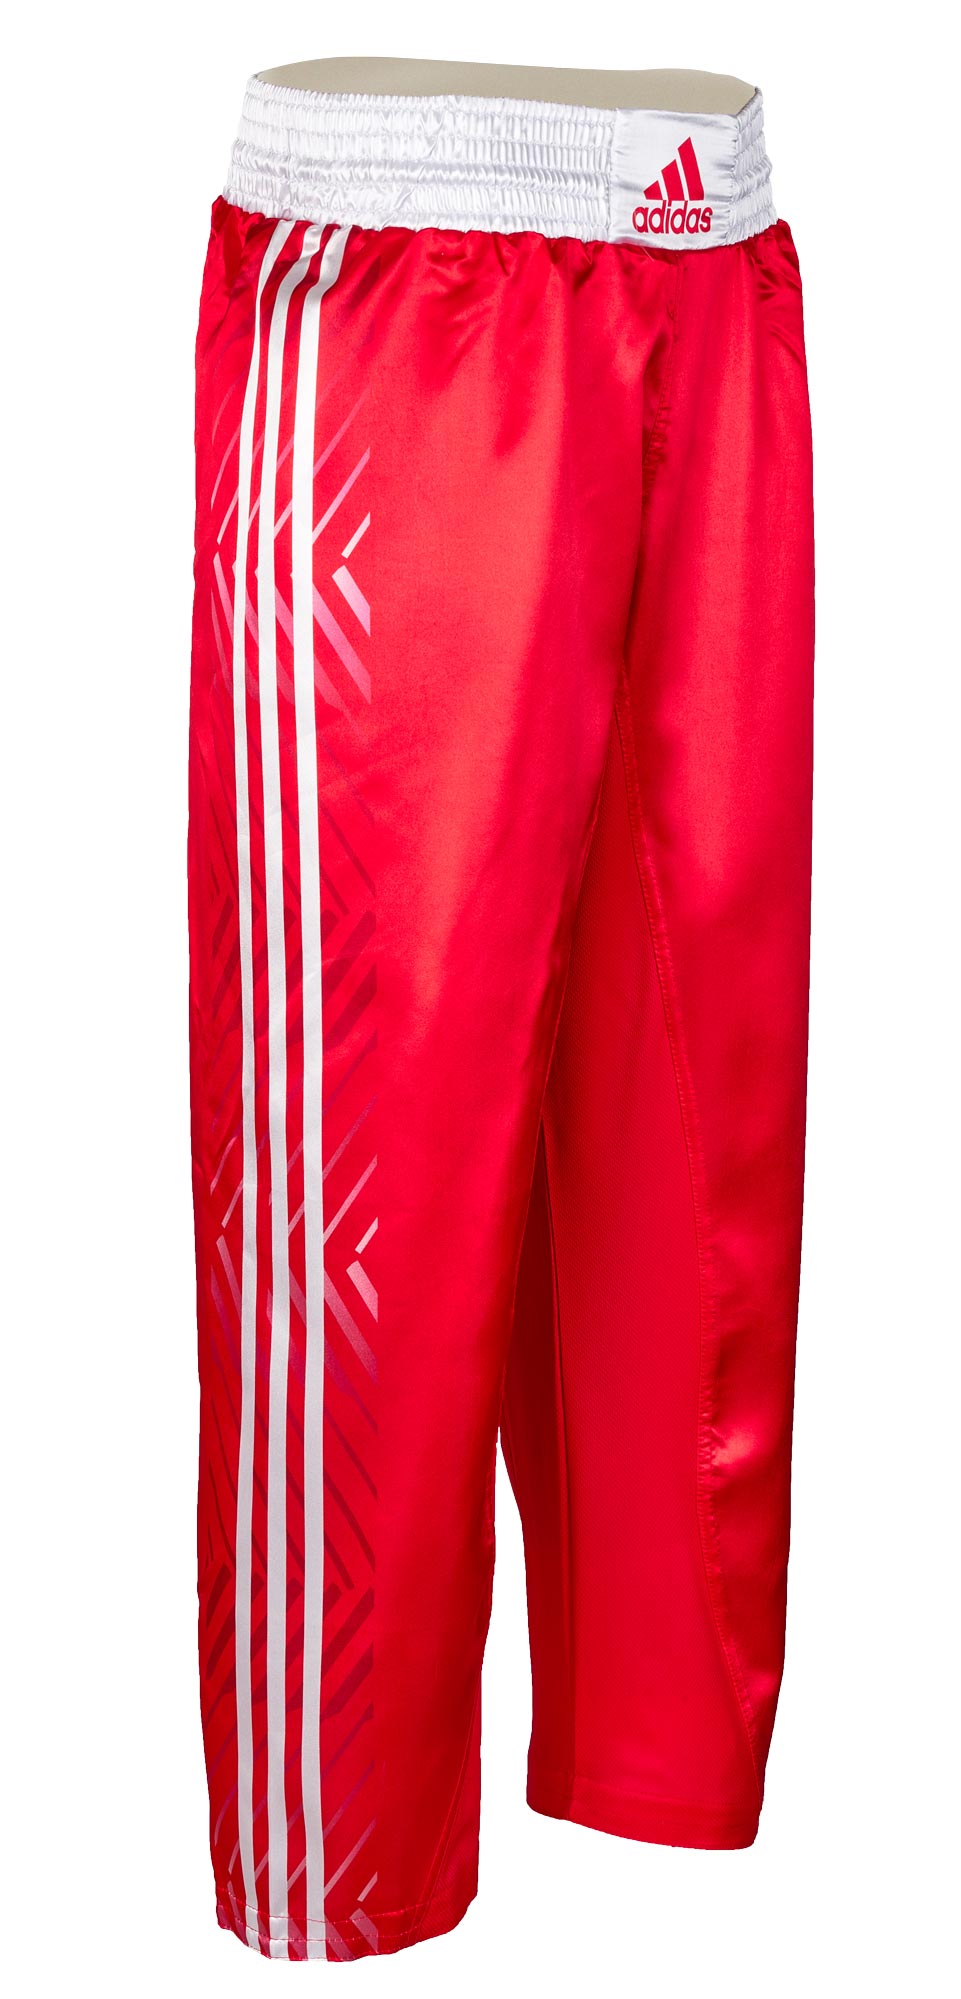 adidas kick boxing pants adiKBUN300T, red/white